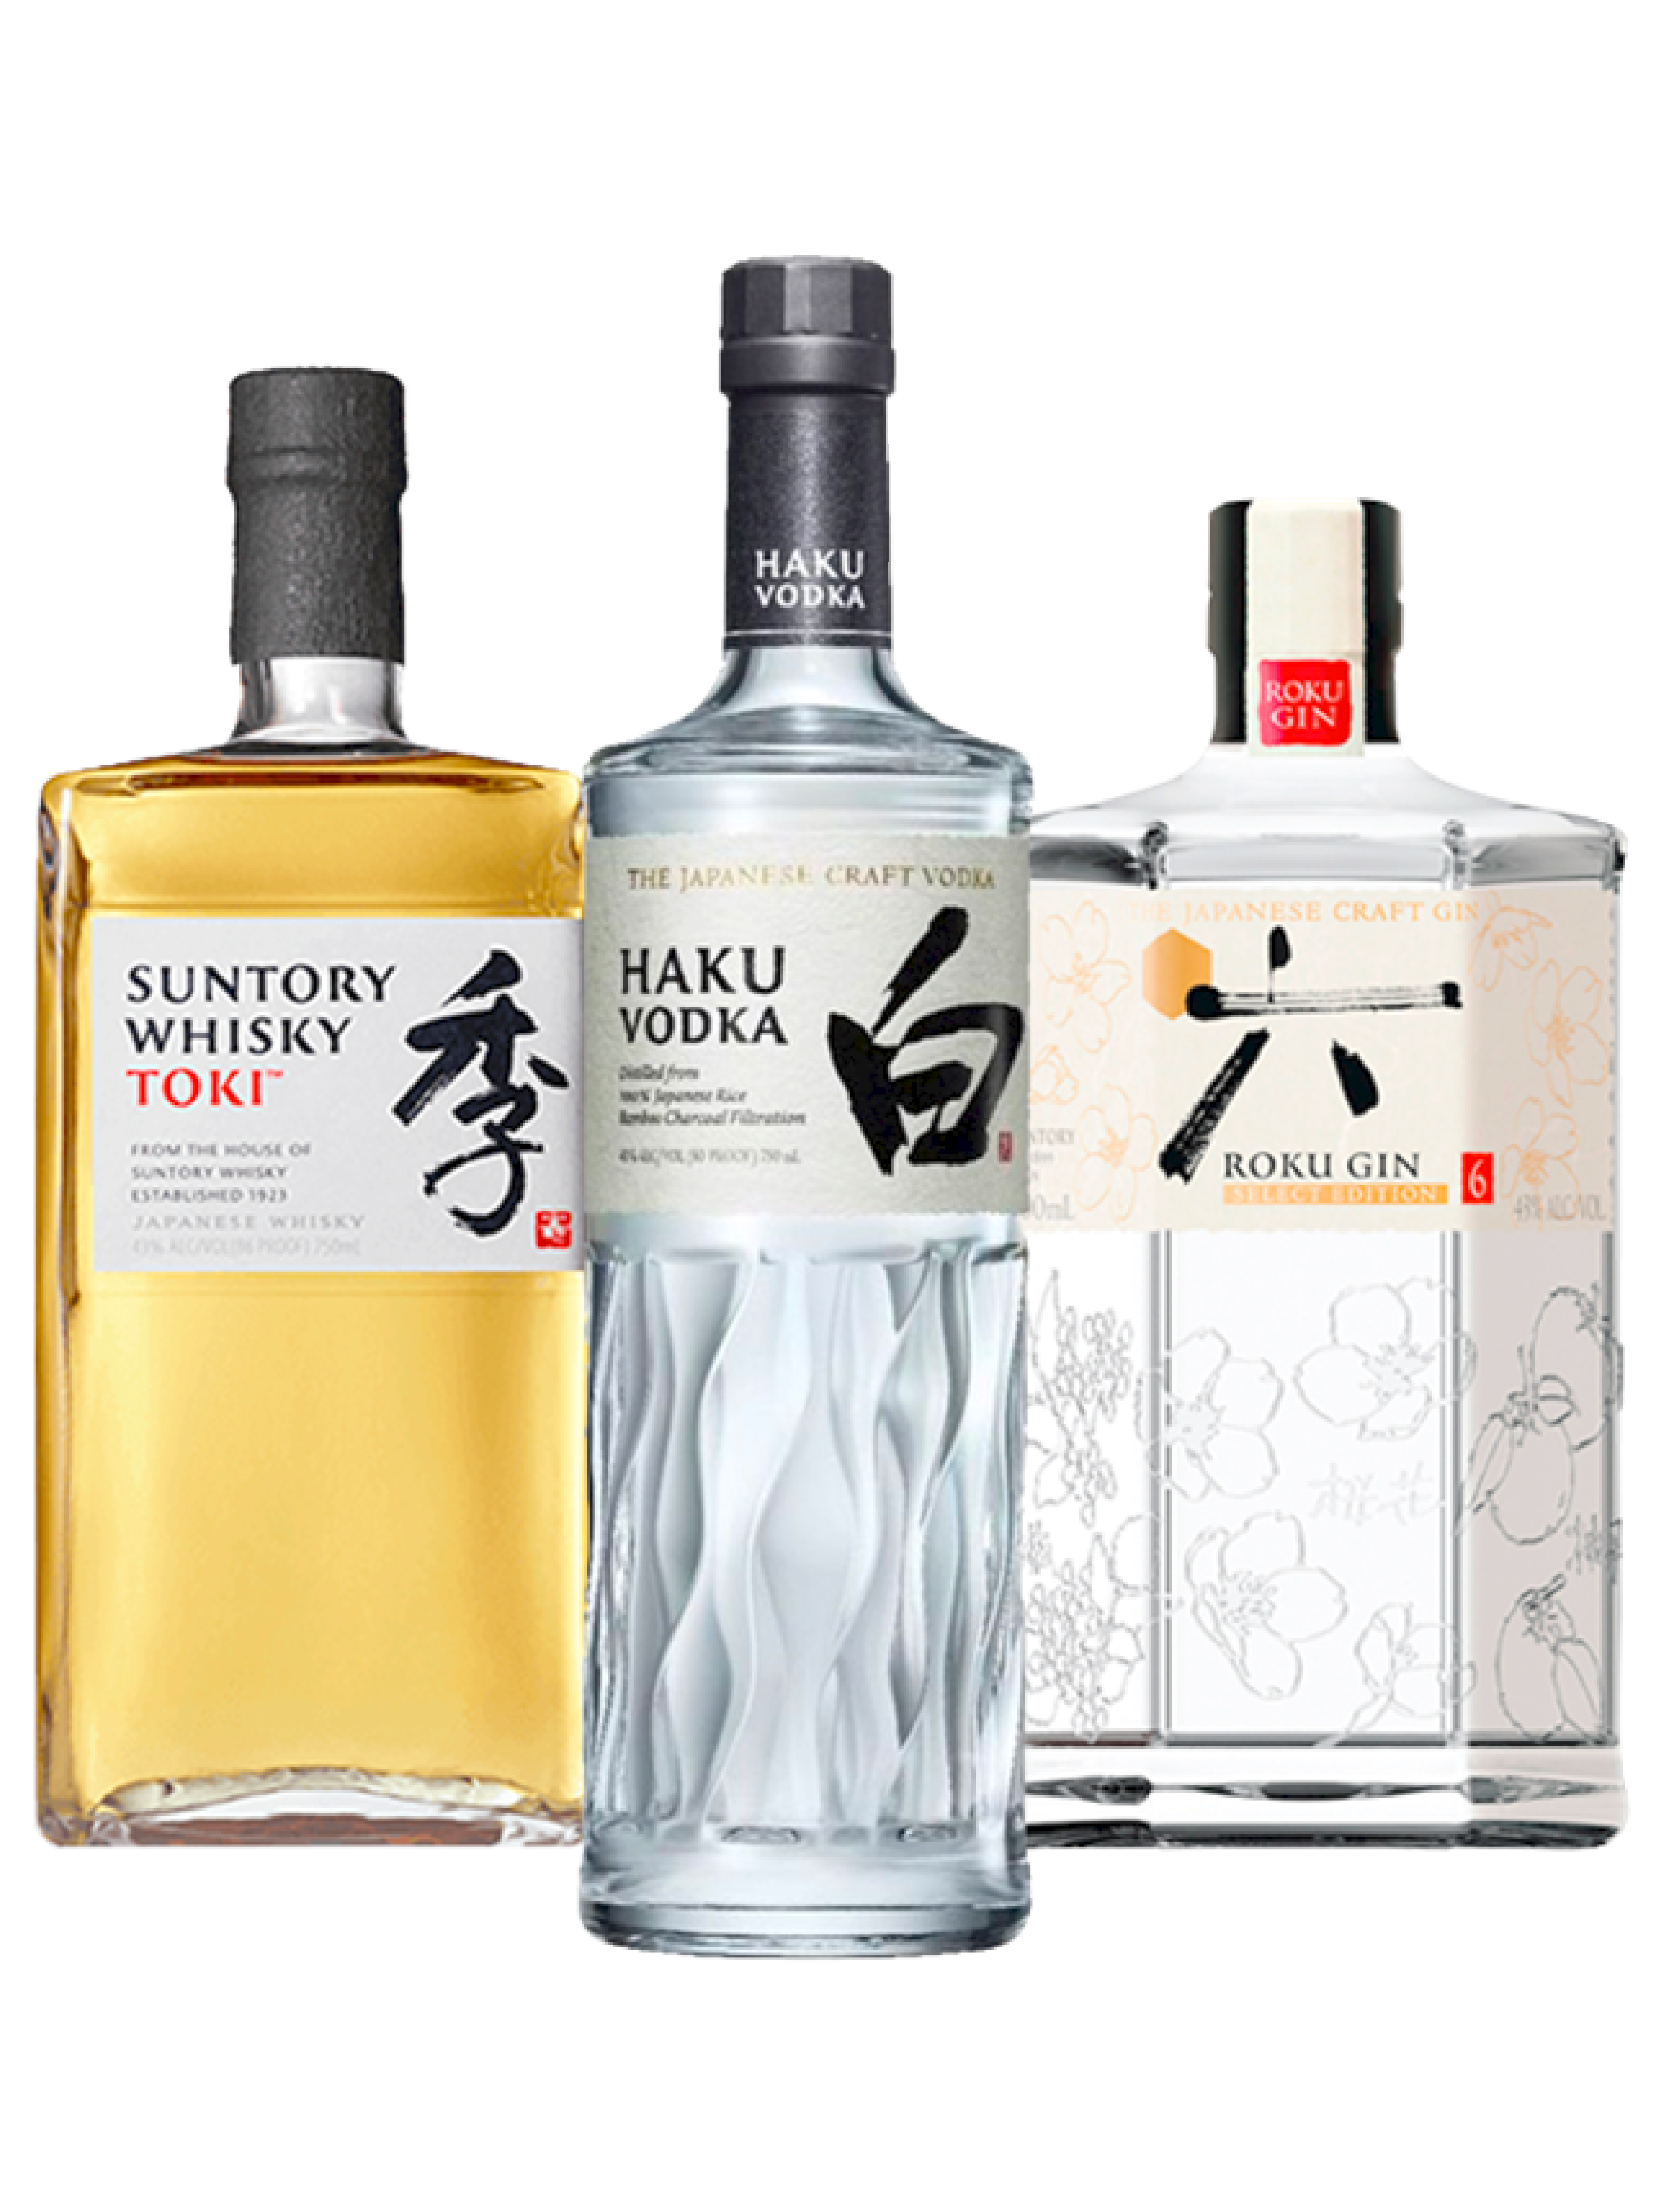 Suntory Japanese Crafted Distillery Bundle (Suntory Whisky, Haku Vodka